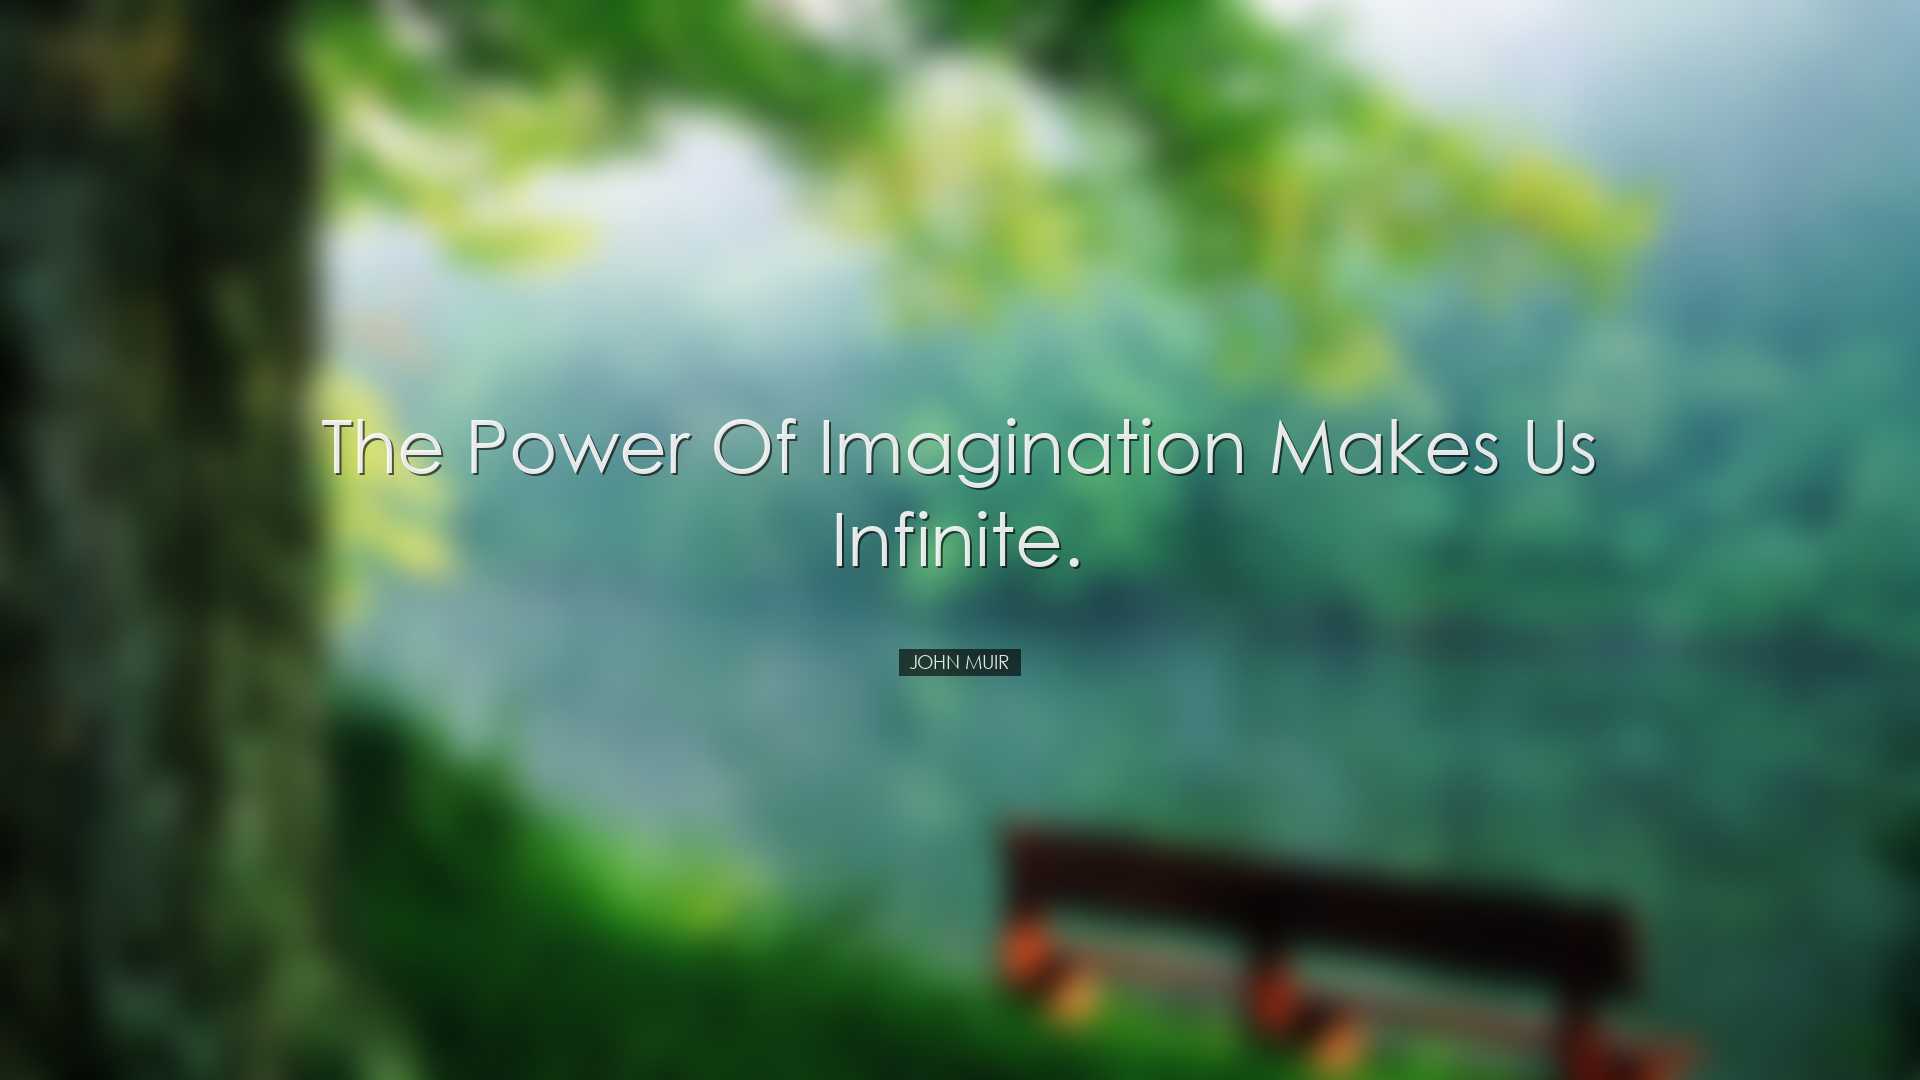 The power of imagination makes us infinite. - John Muir